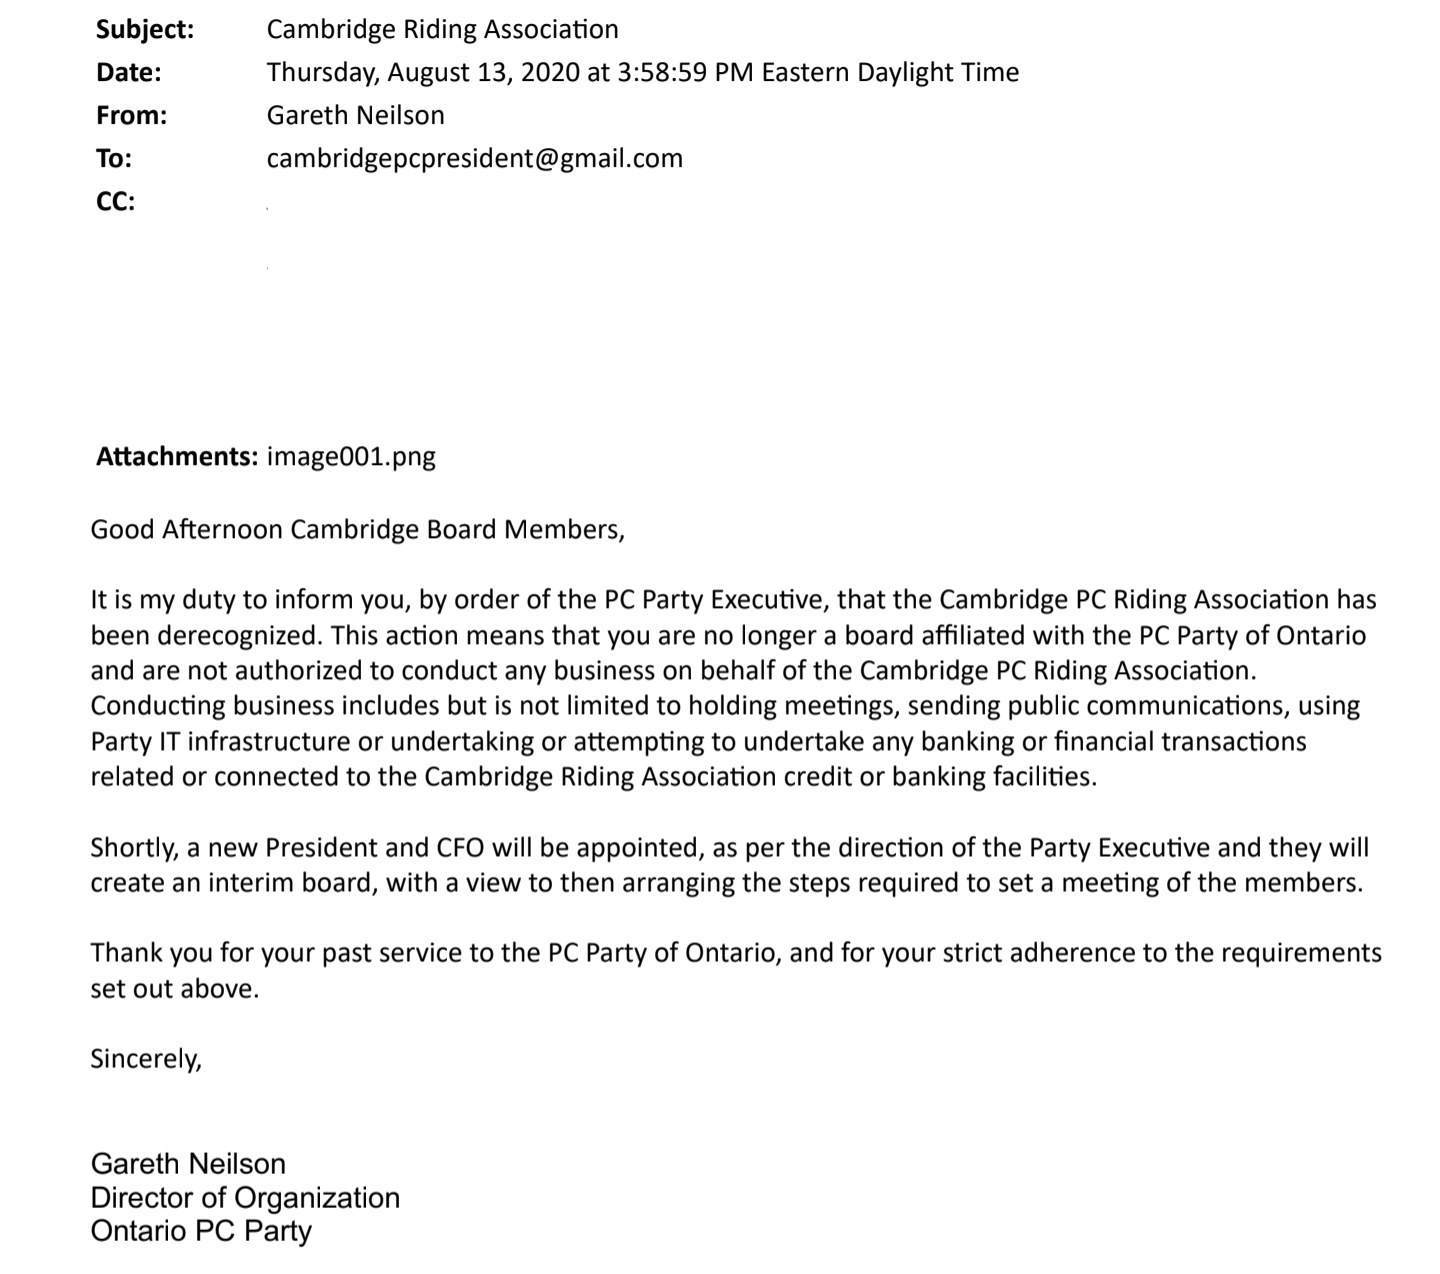 Email regarding the “derecognizing” of the Cambridge PC riding association.